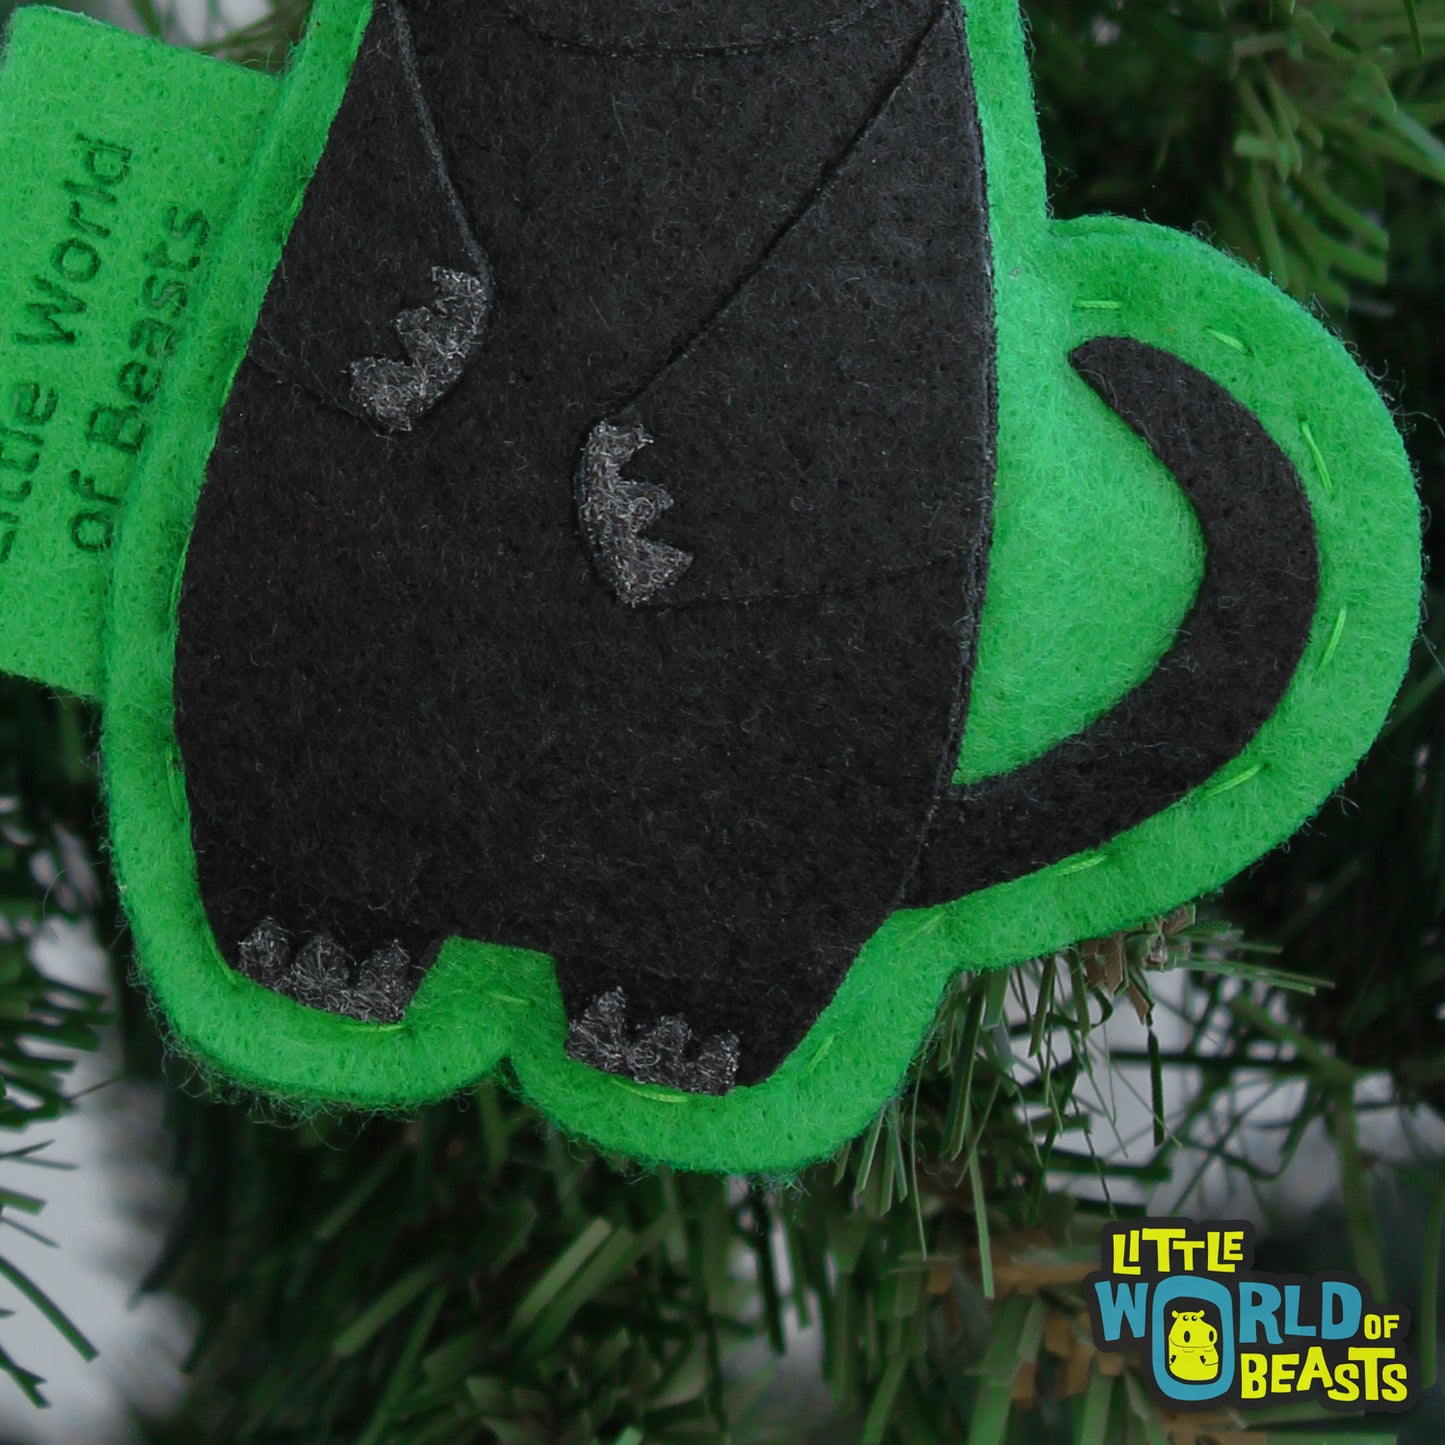 Felt Christmas  Ornament - Black Cat